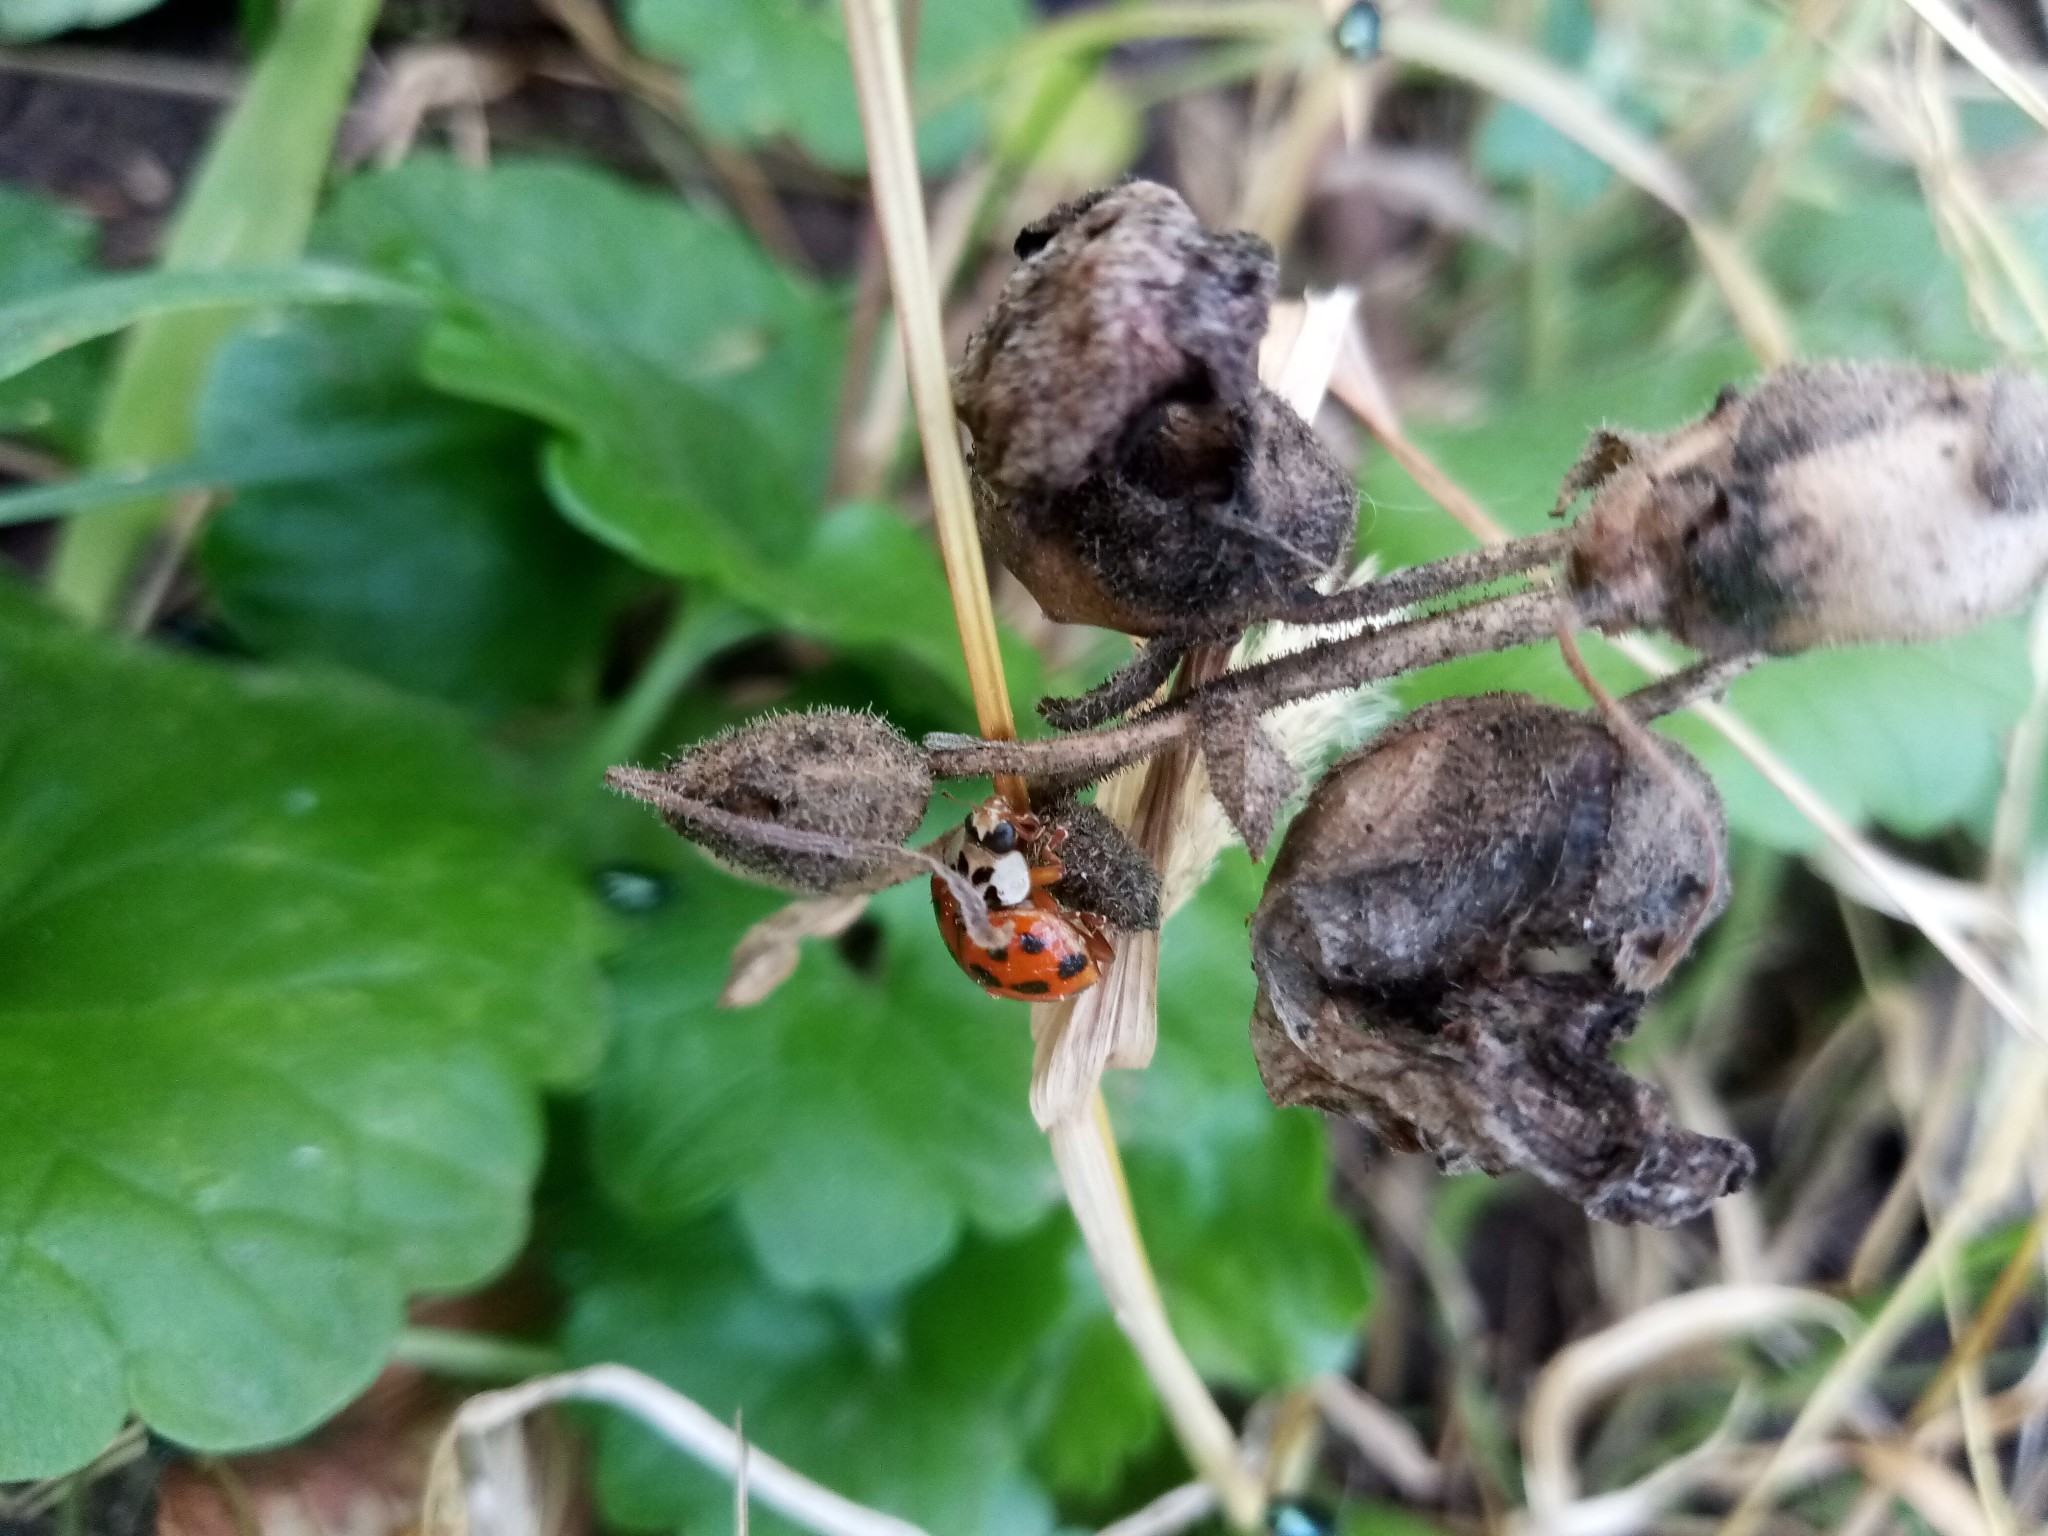 Ladybug on green grass photo 